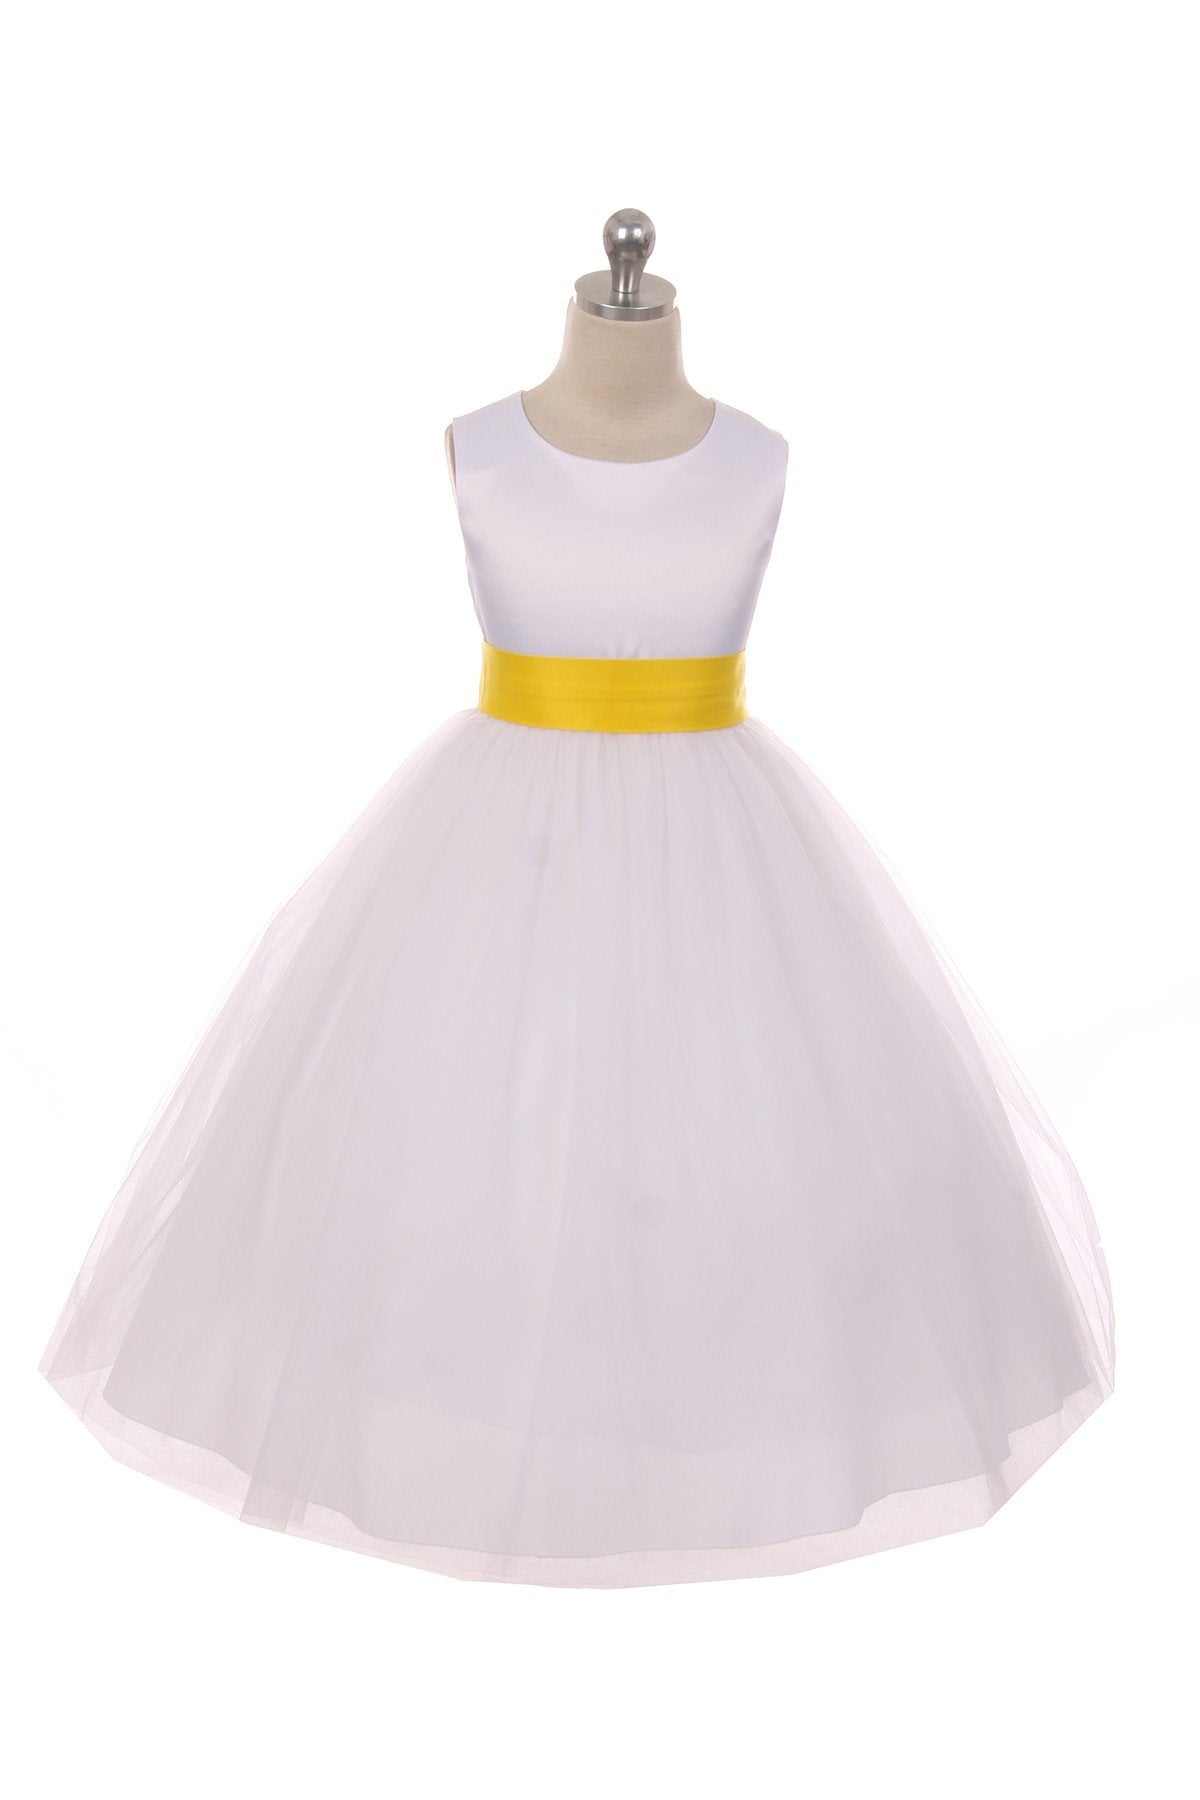 Dress - Satin Sash Bow Girl Dress (White Dress)